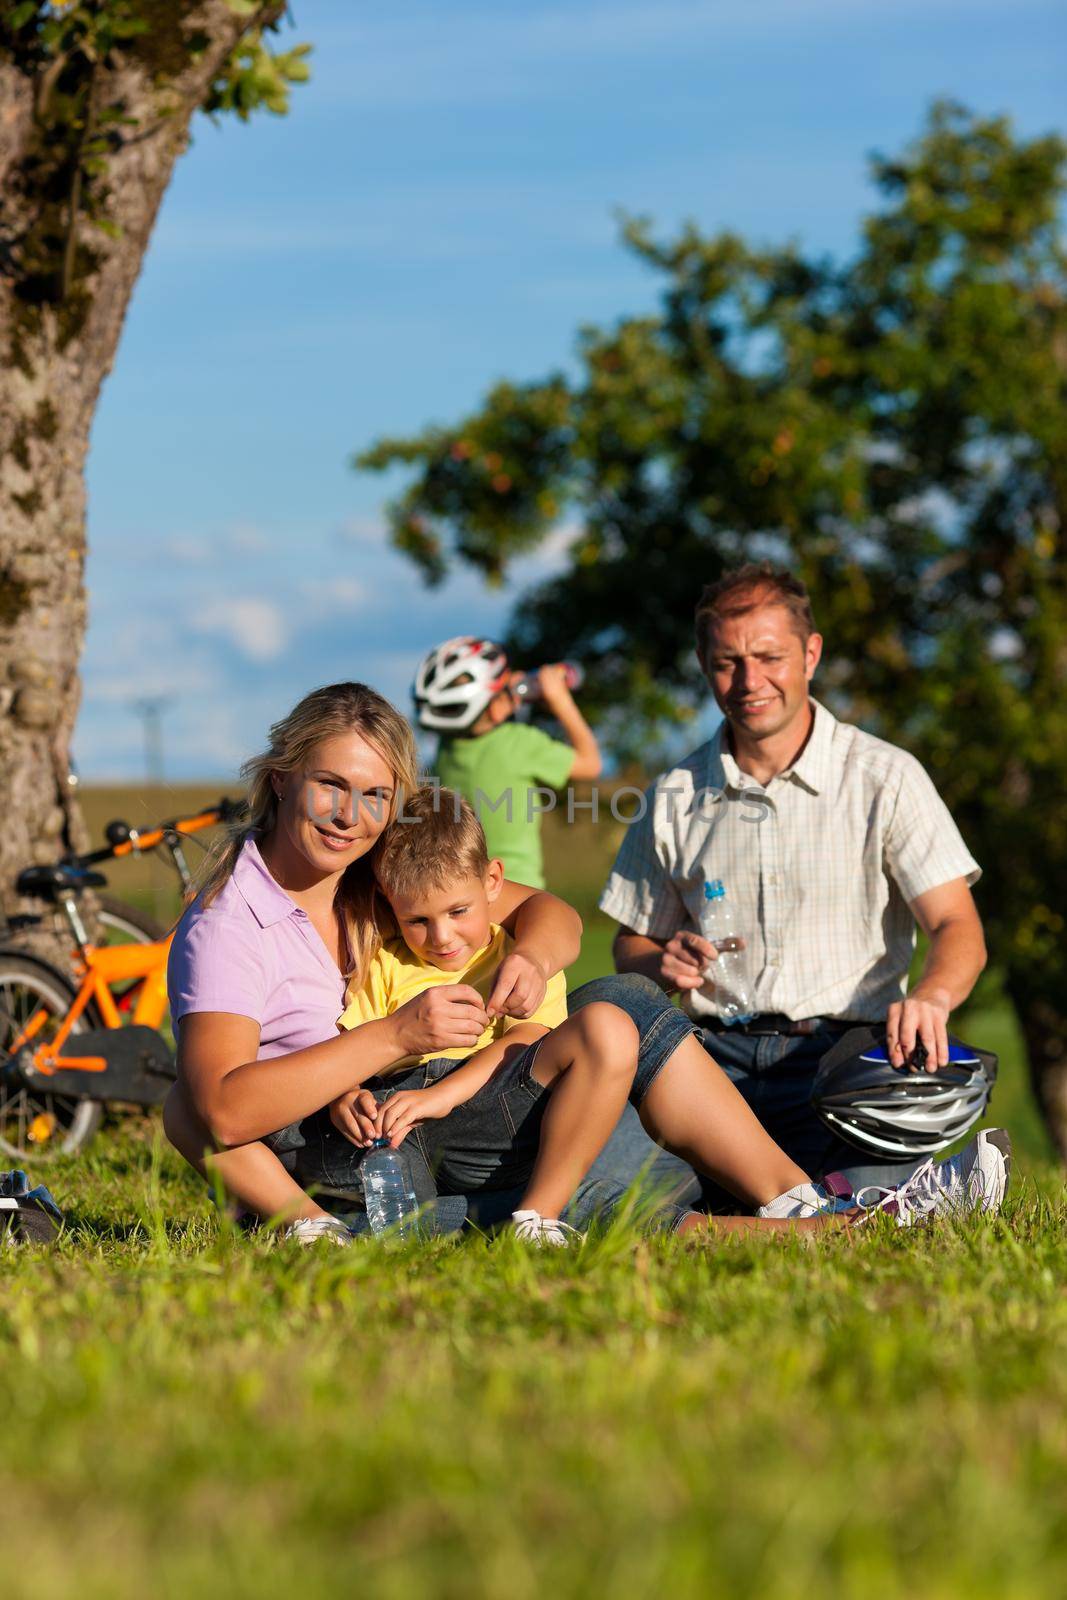 Family on getaway with bikes by Kzenon